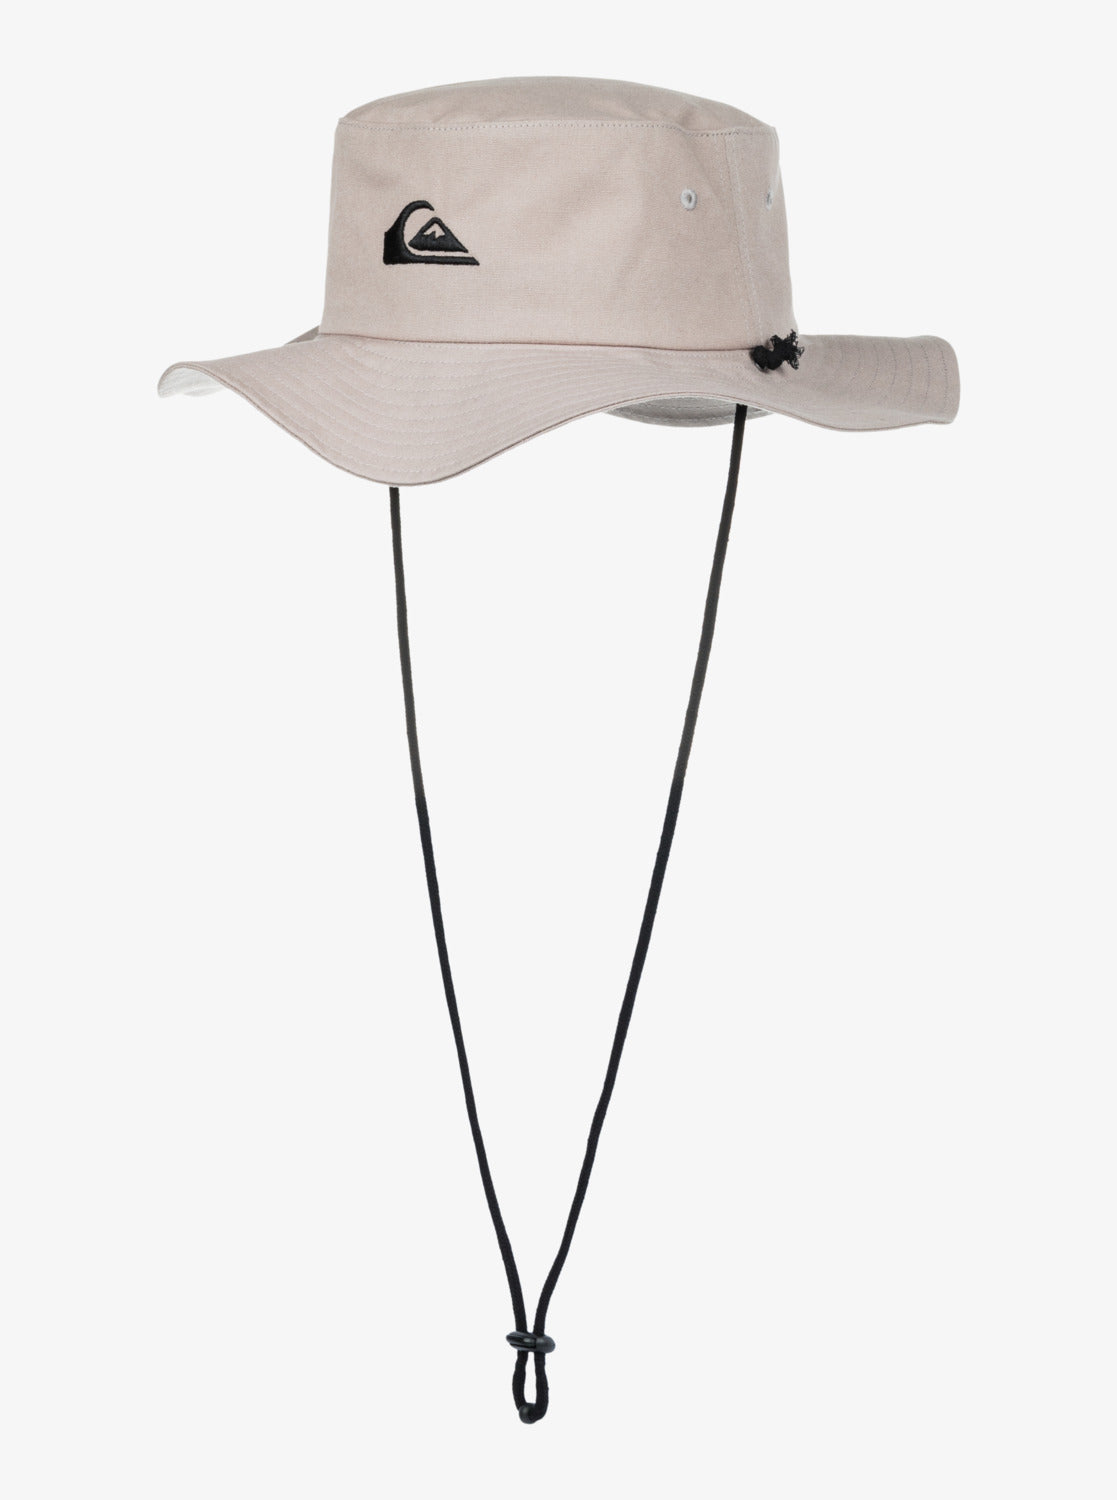 Quiksilver Bushmaster Hat - Sleet - S/M